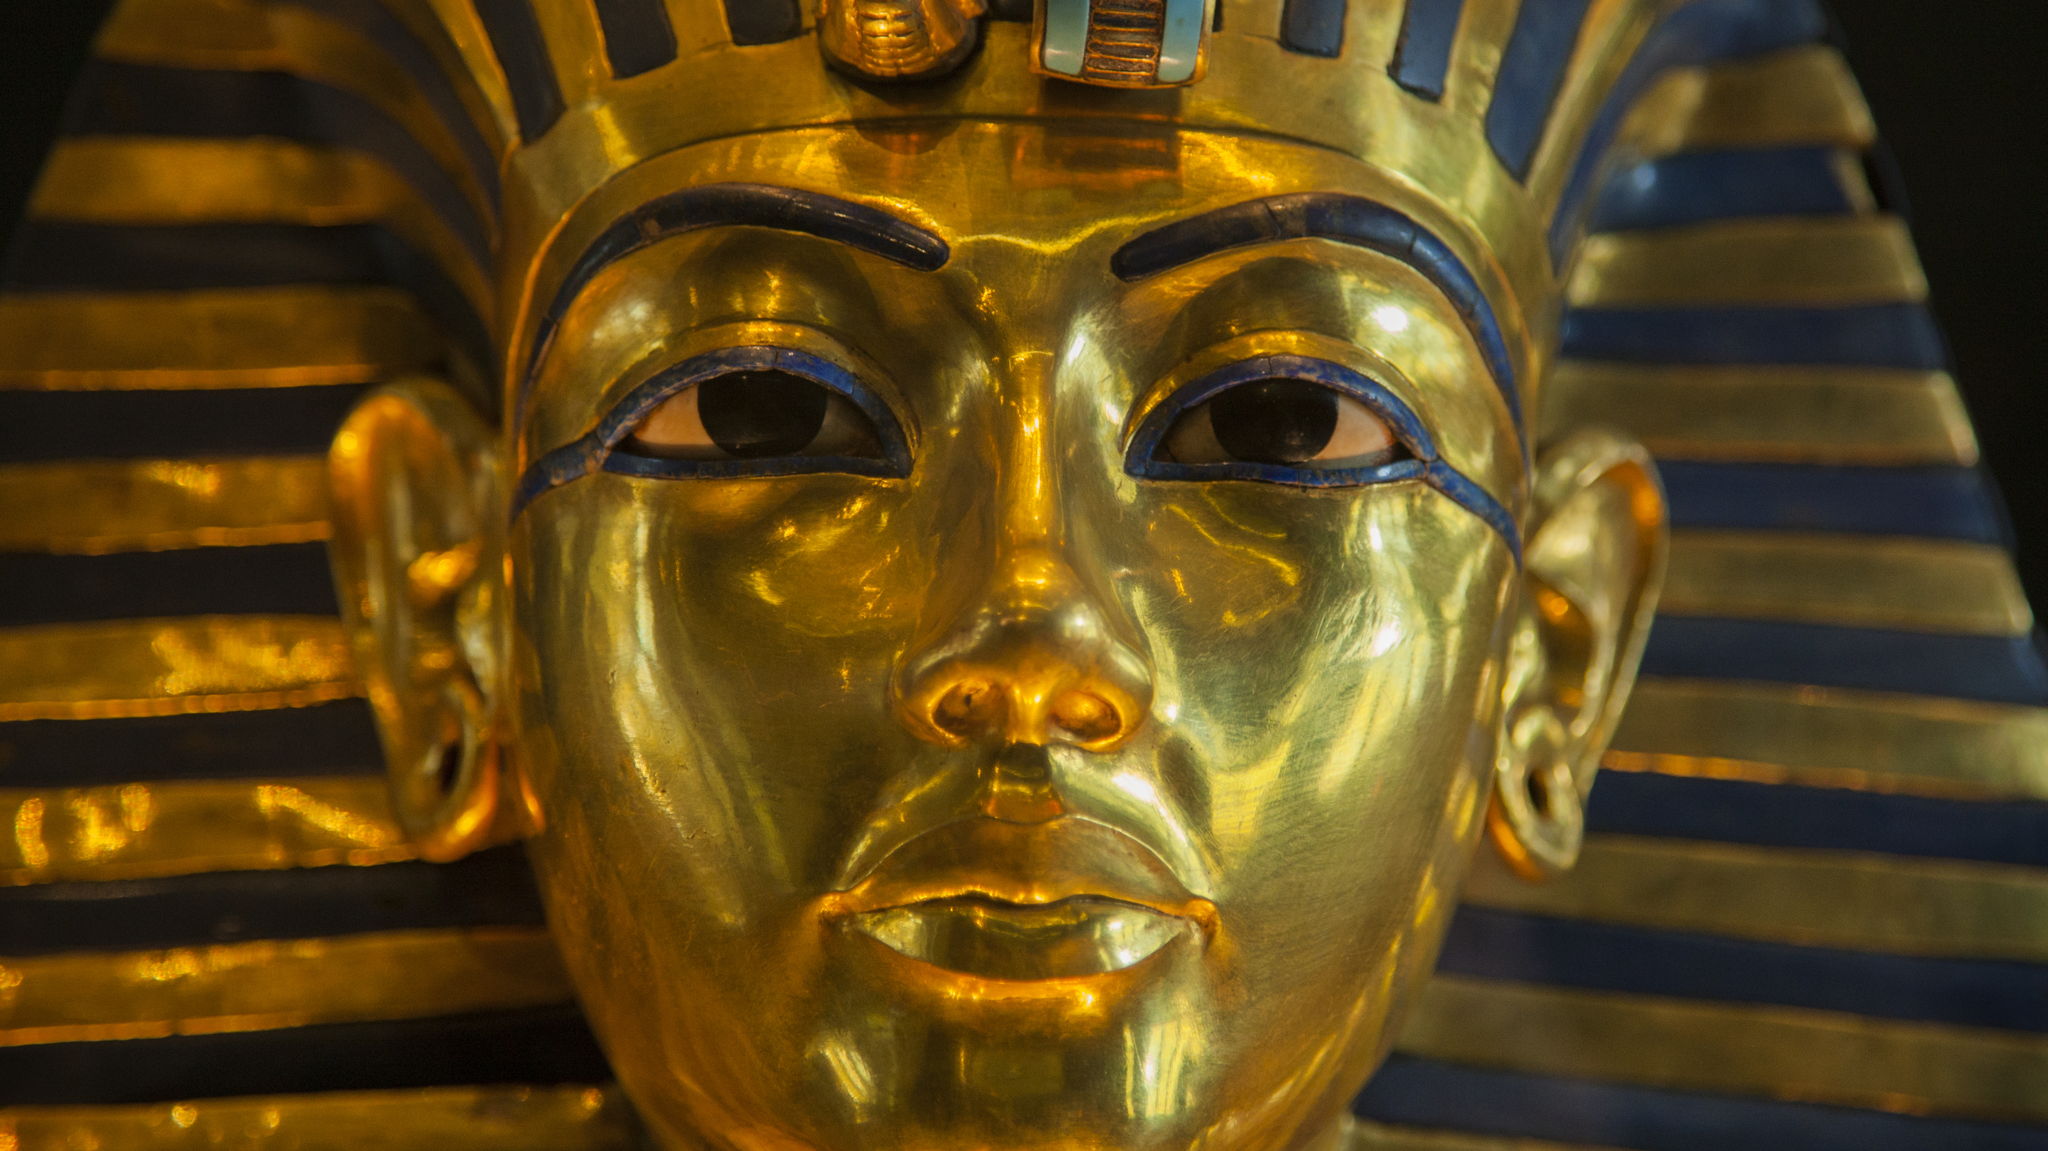 King Tutankhamun's tomb